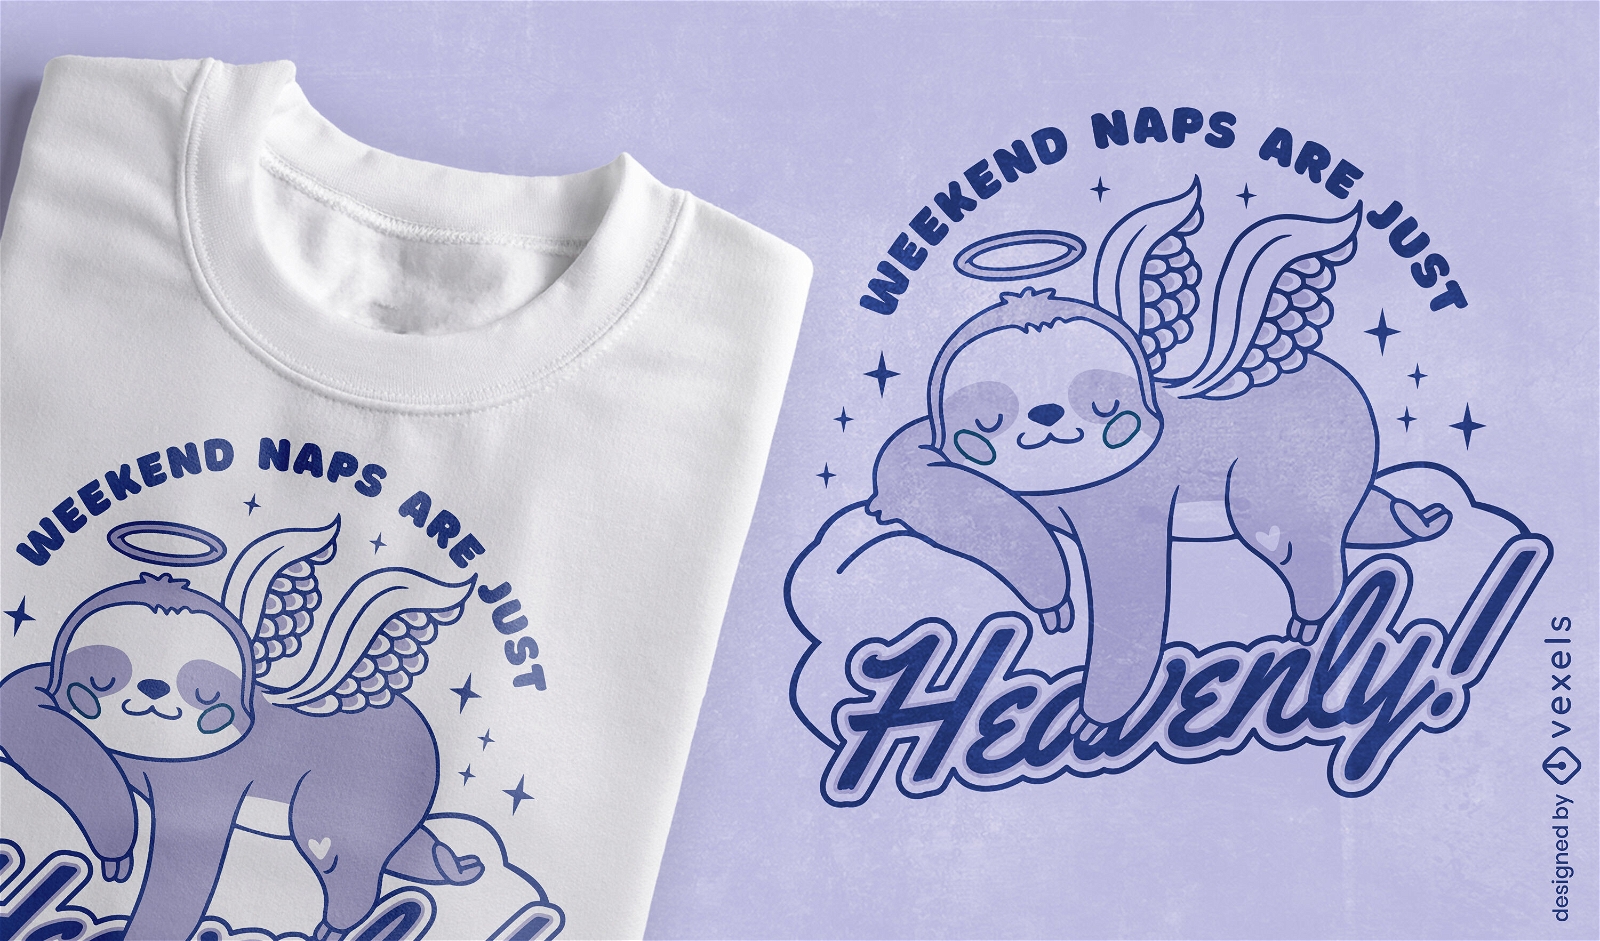 Cute heavenly naps angel sloth cartoon t-shirt design